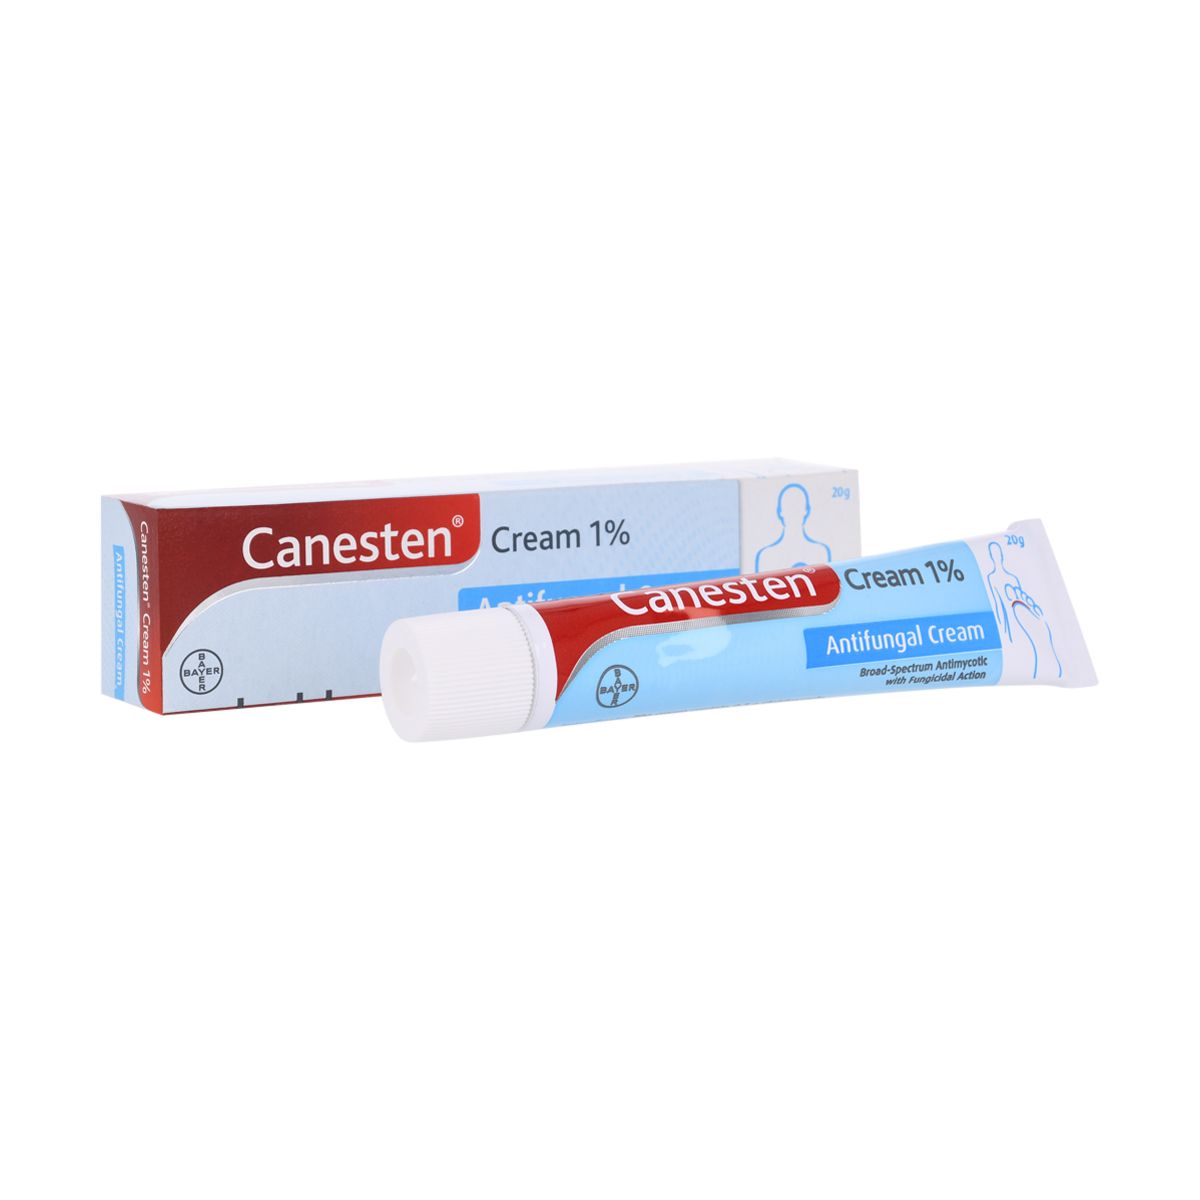 CANESTEN Canesten Cream 20g